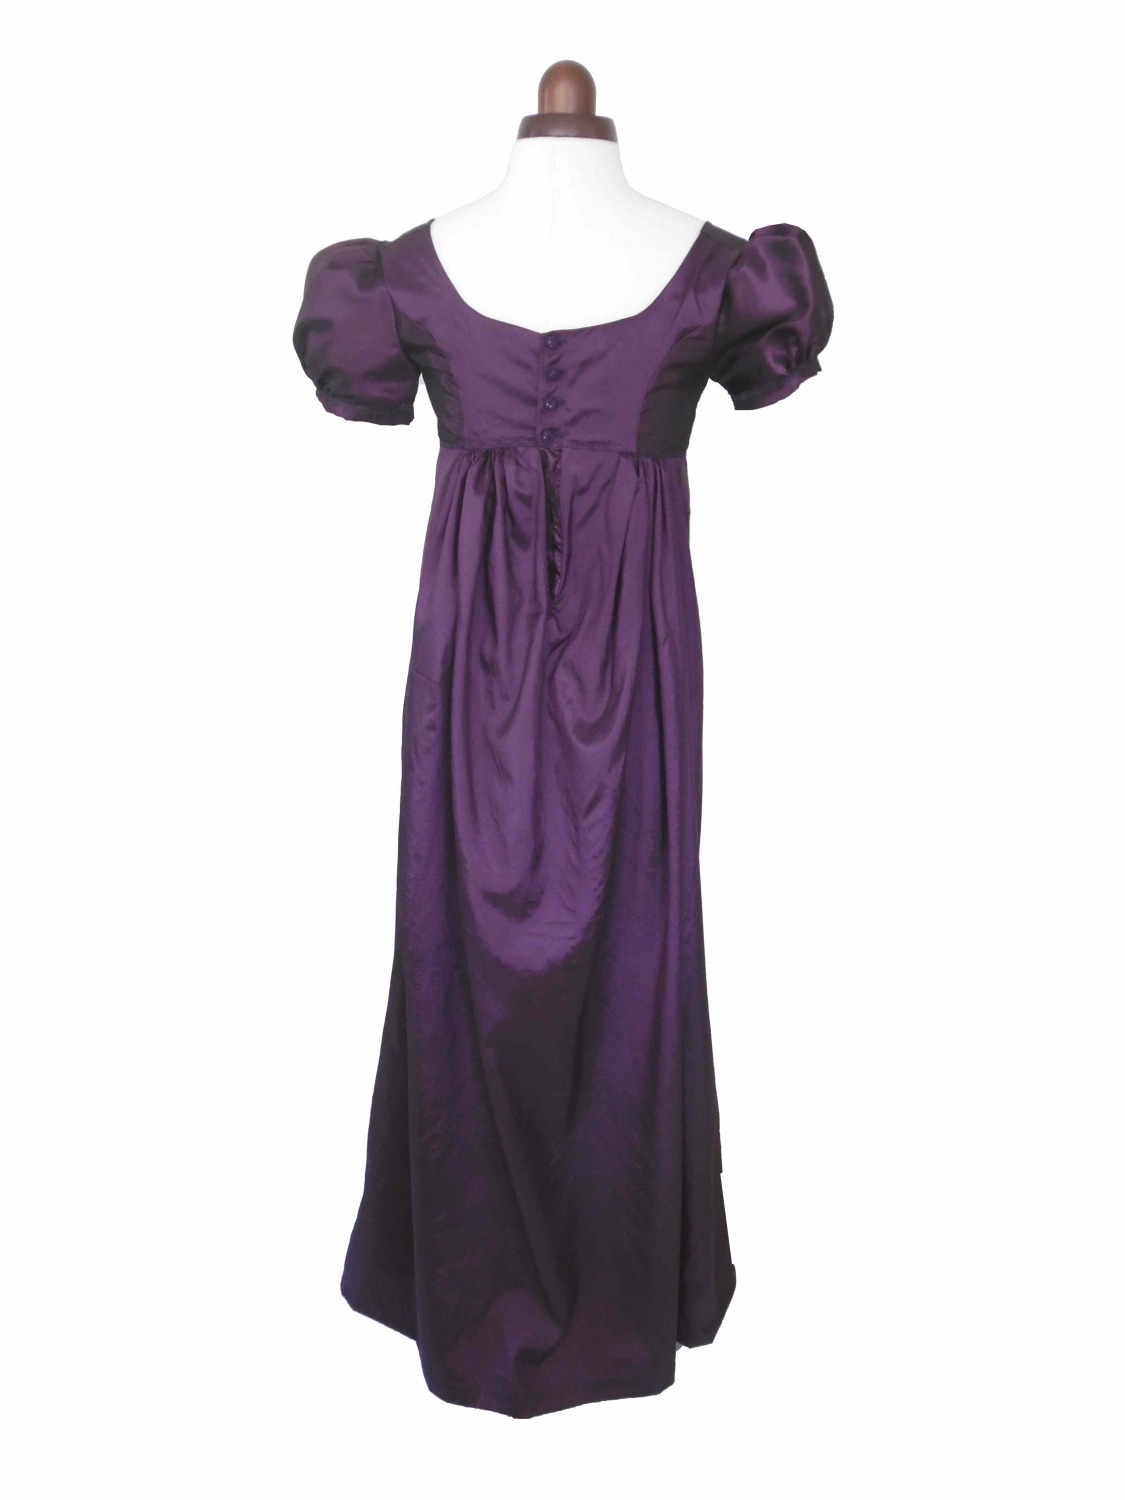 Ladies Regency Evening Ballgown Costume Size 6 - 8 - Complete Costumes ...